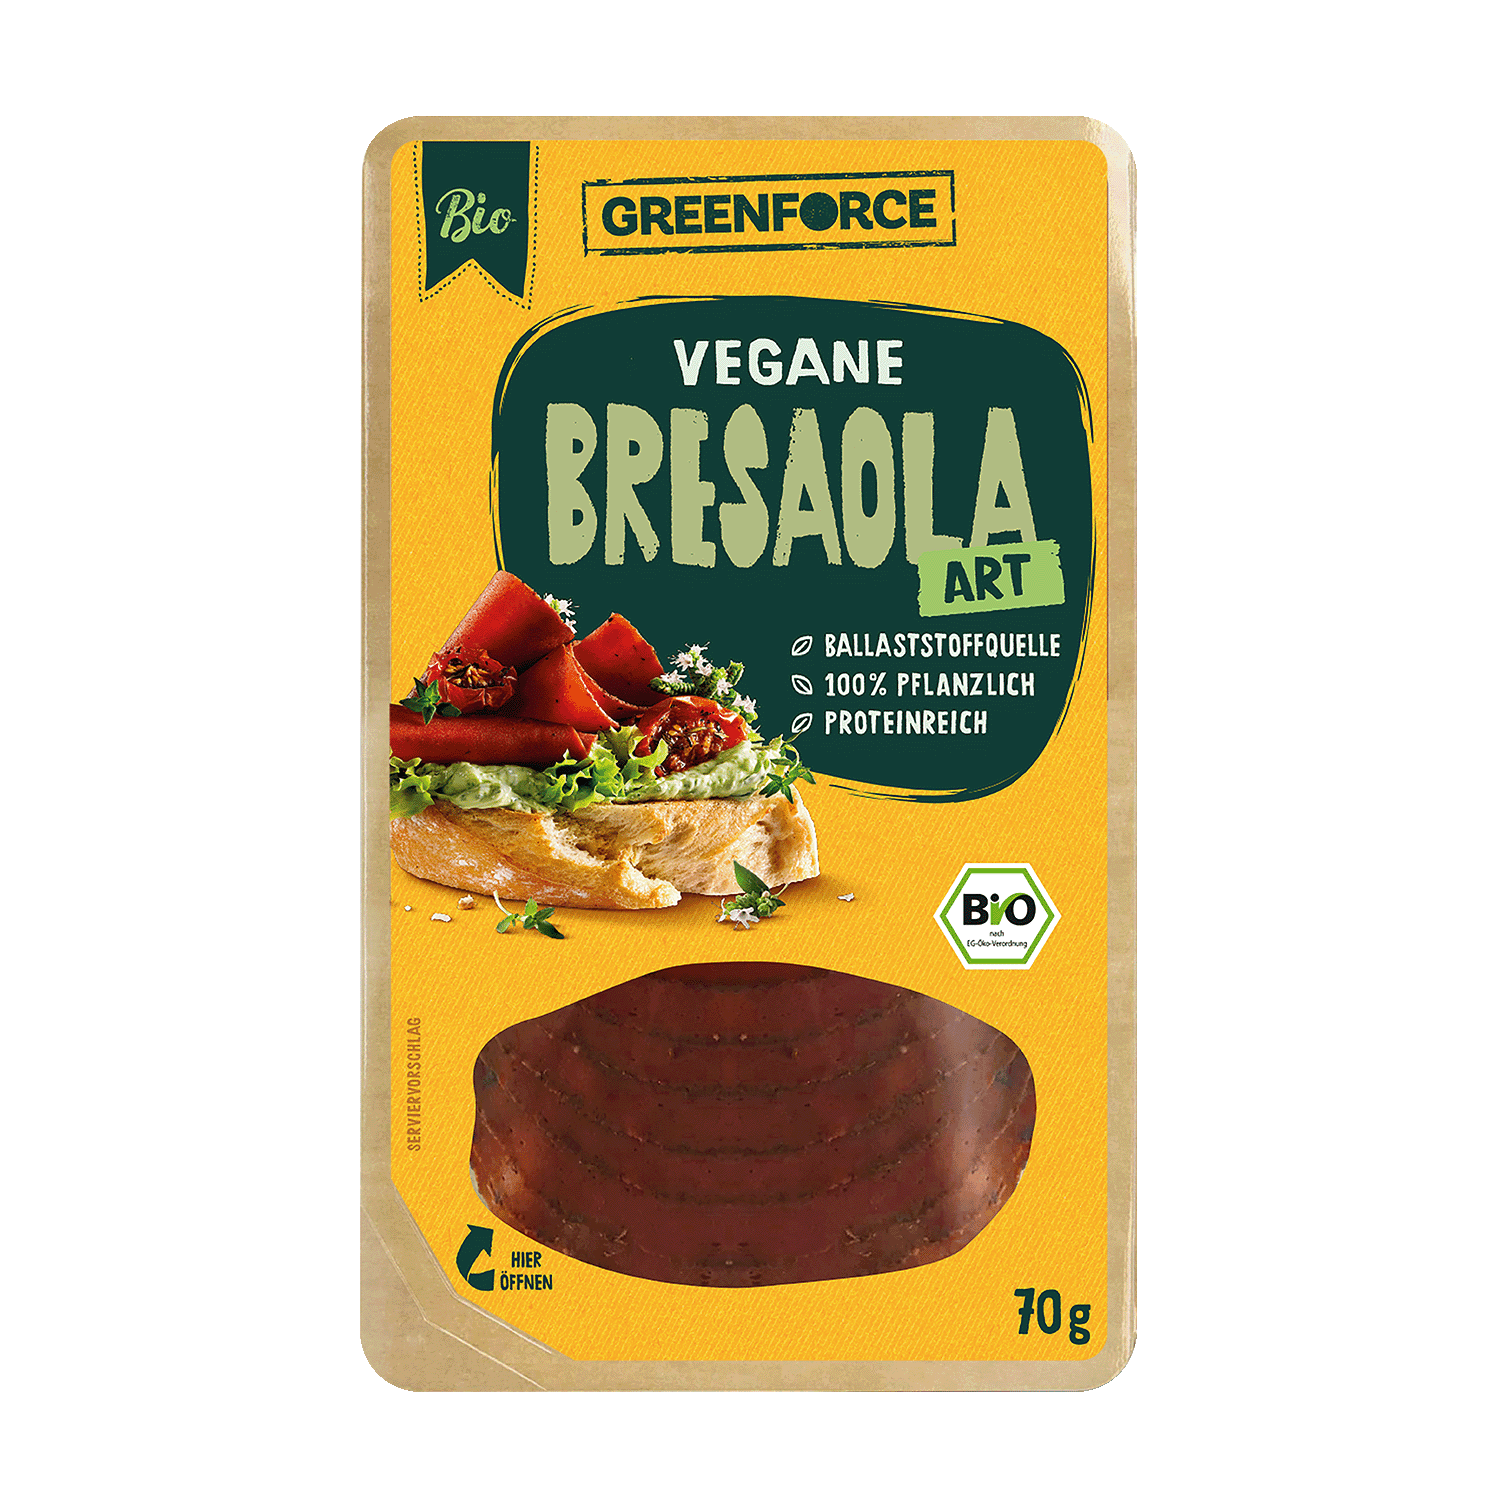 Vegan Bresaola Style, Organic, 70g